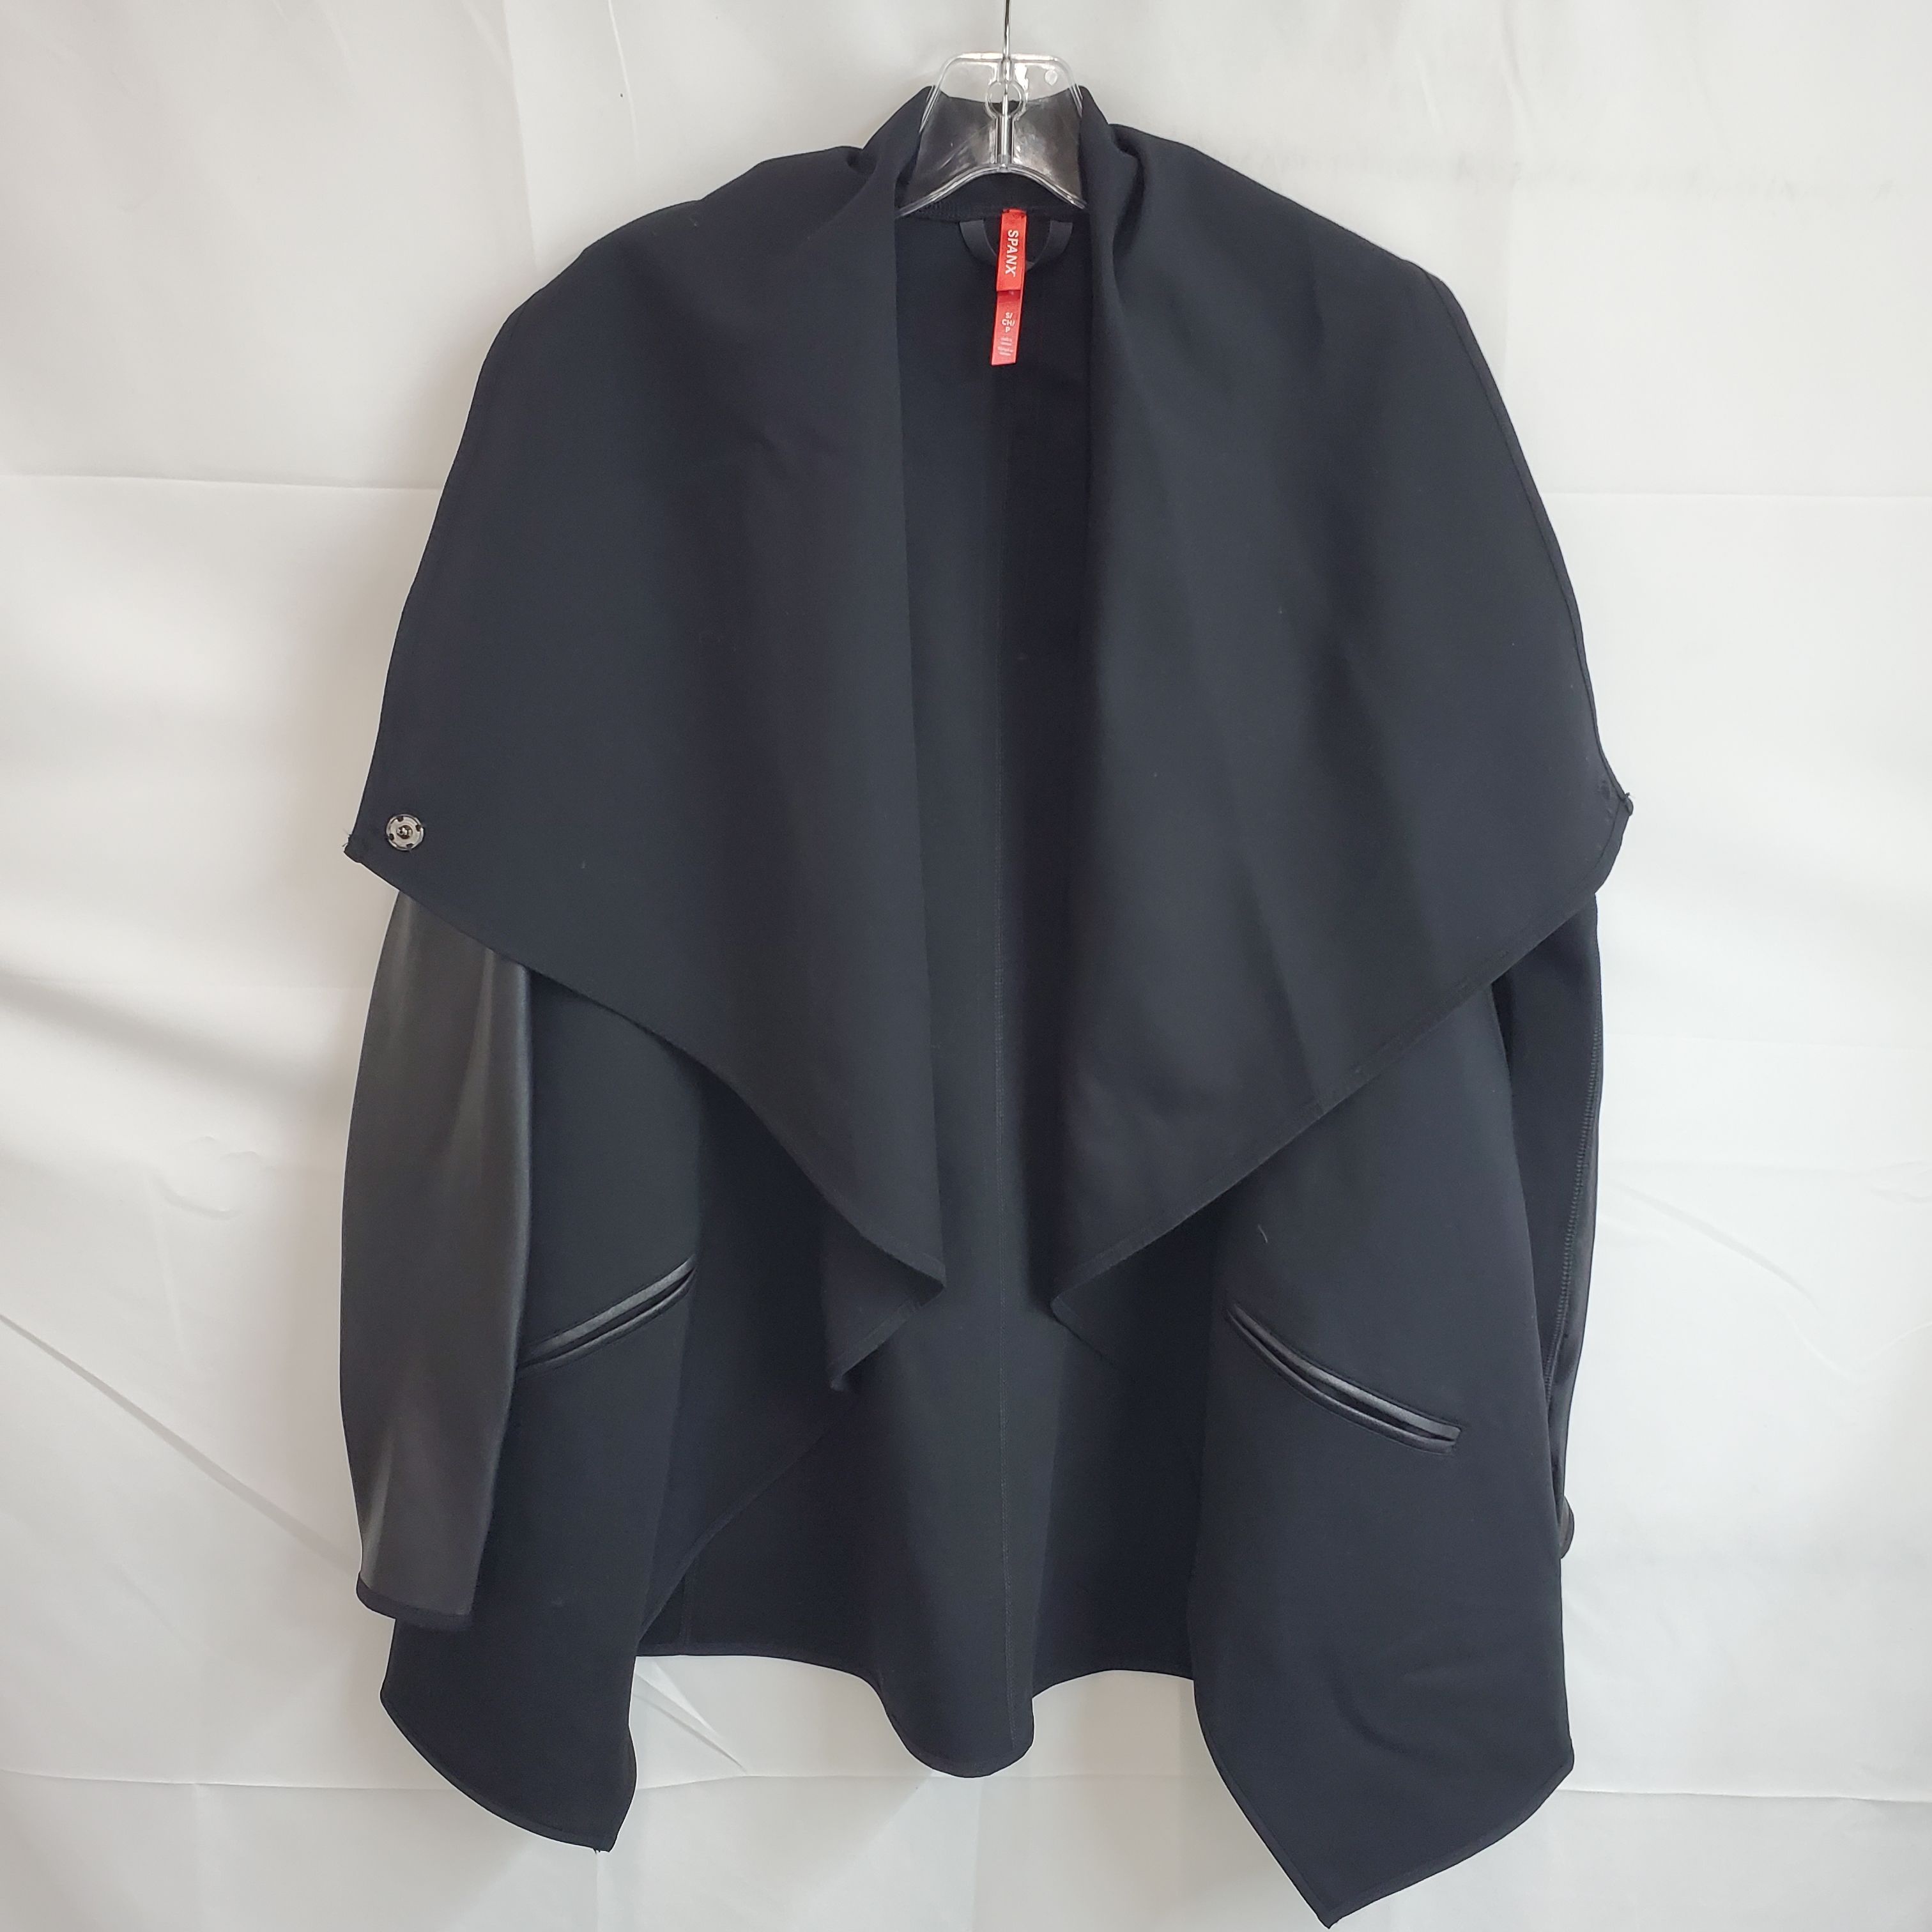 Buy the Spanx Black Drape Front Jacket NWT Women's Size S